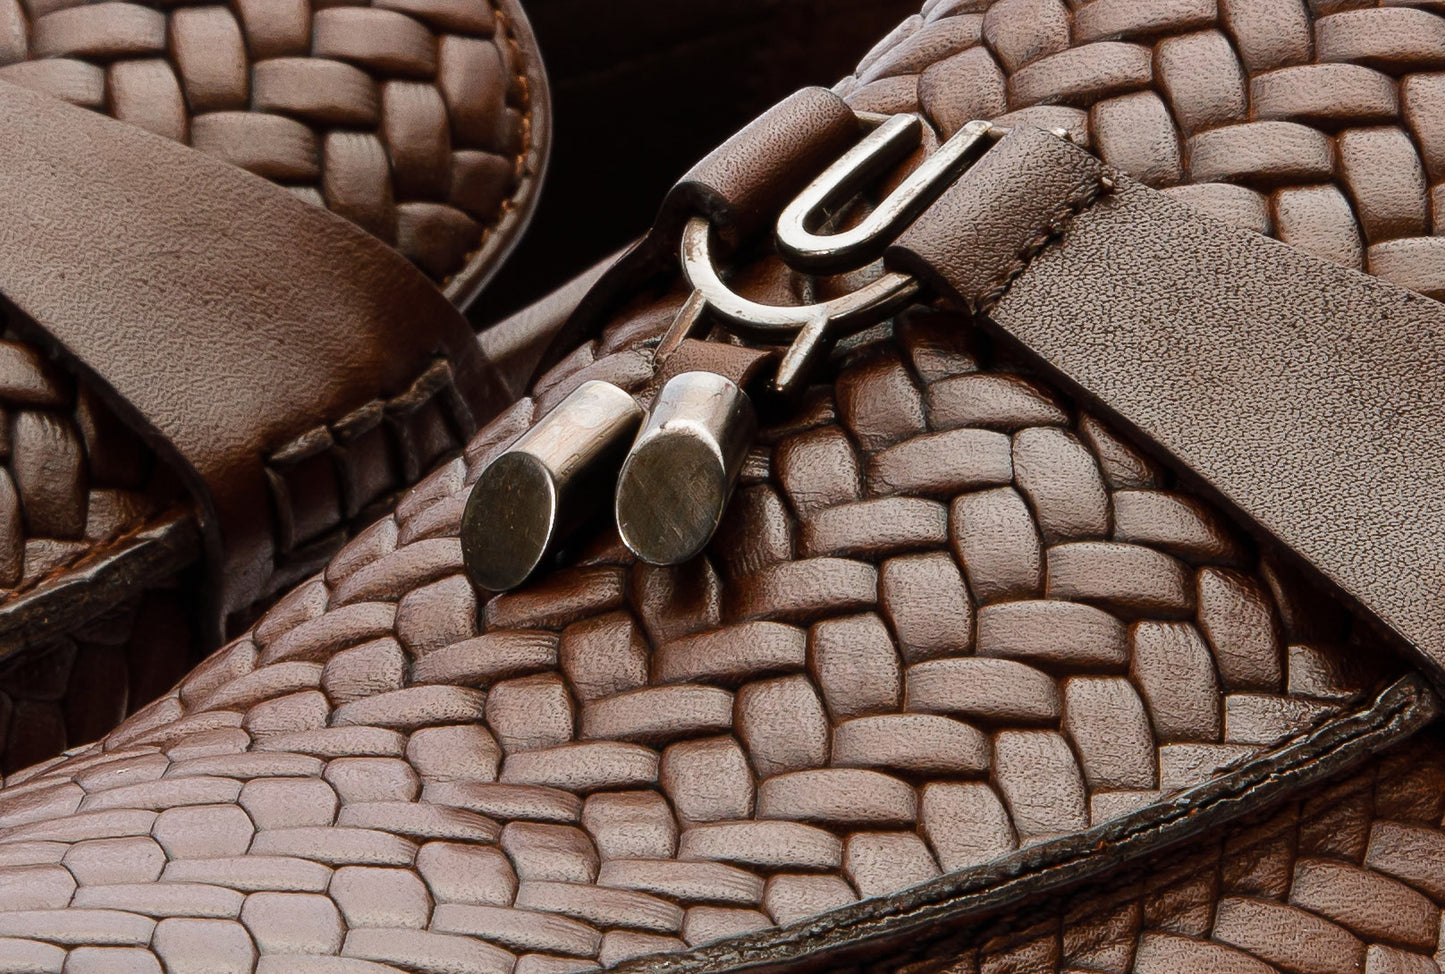 The Sperry Tan Leather Tassel Loafer Men Shoe